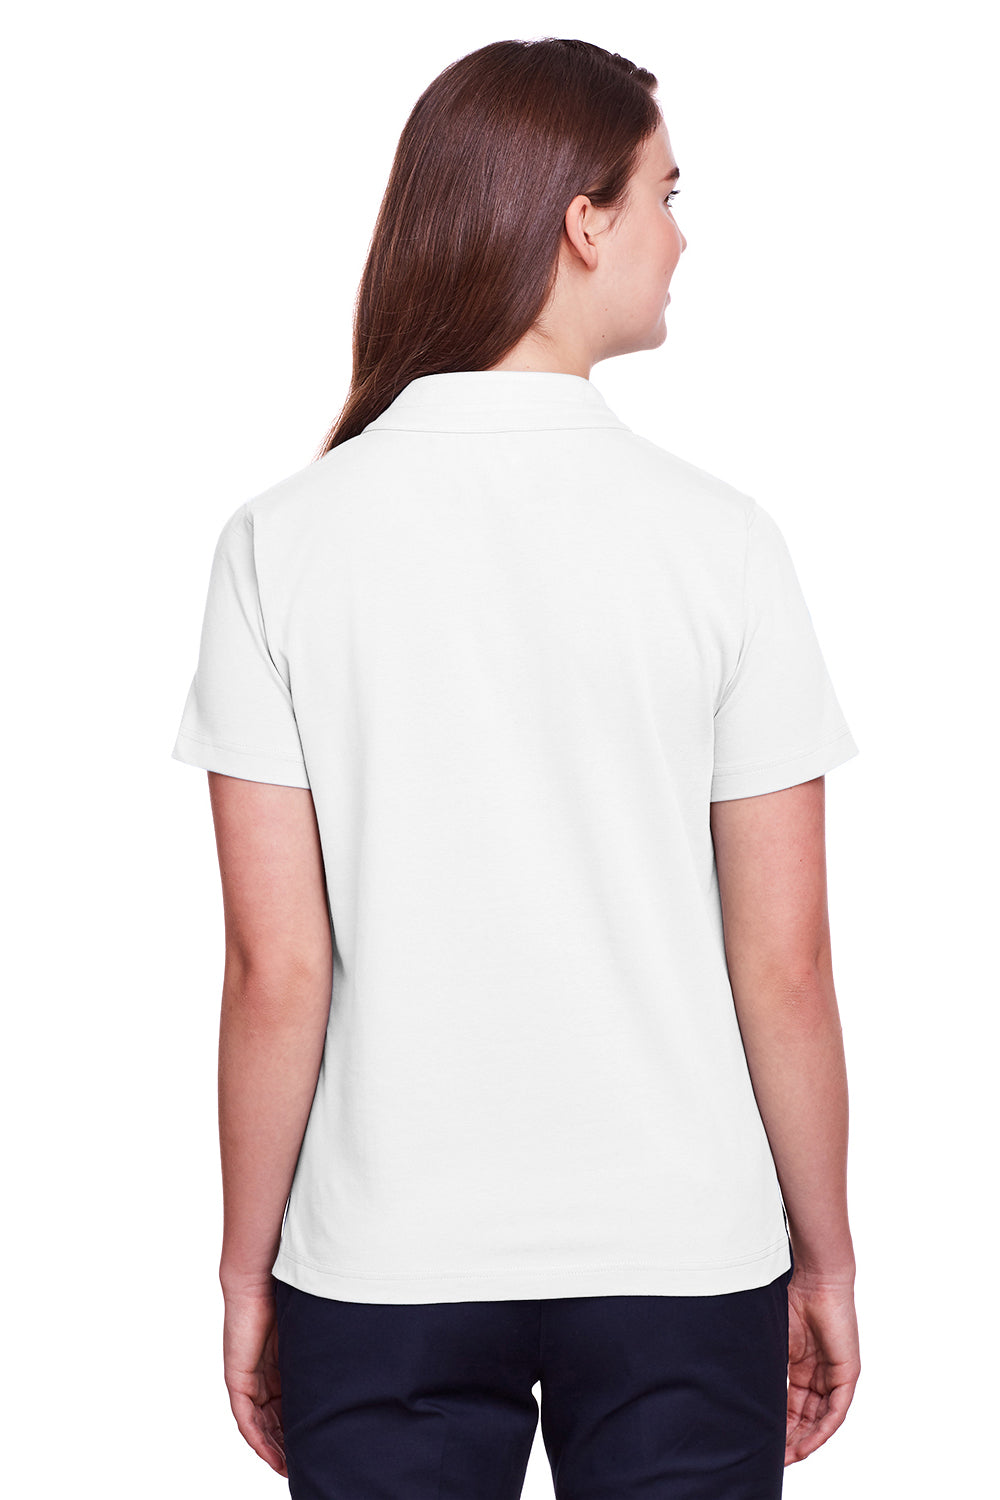 UltraClub UC105W Womens Lakeshore Performance Moisture Wicking Short Sleeve Polo Shirt White Back